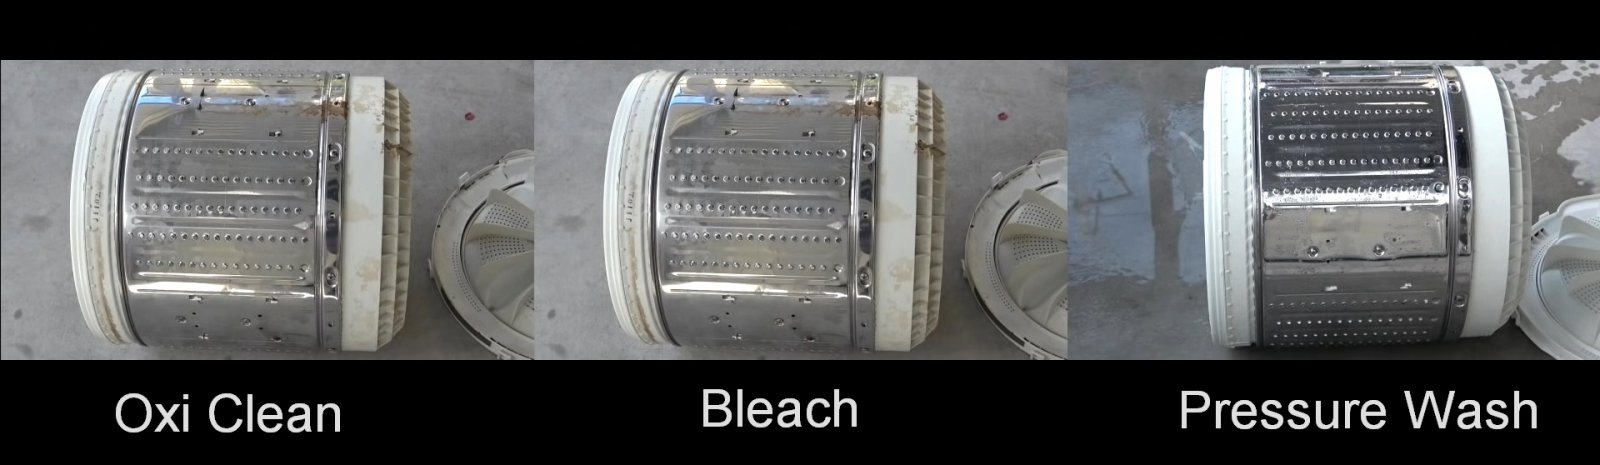 Oxi clean vs. Chlorine bleach vs. Hand wash_10.jpg